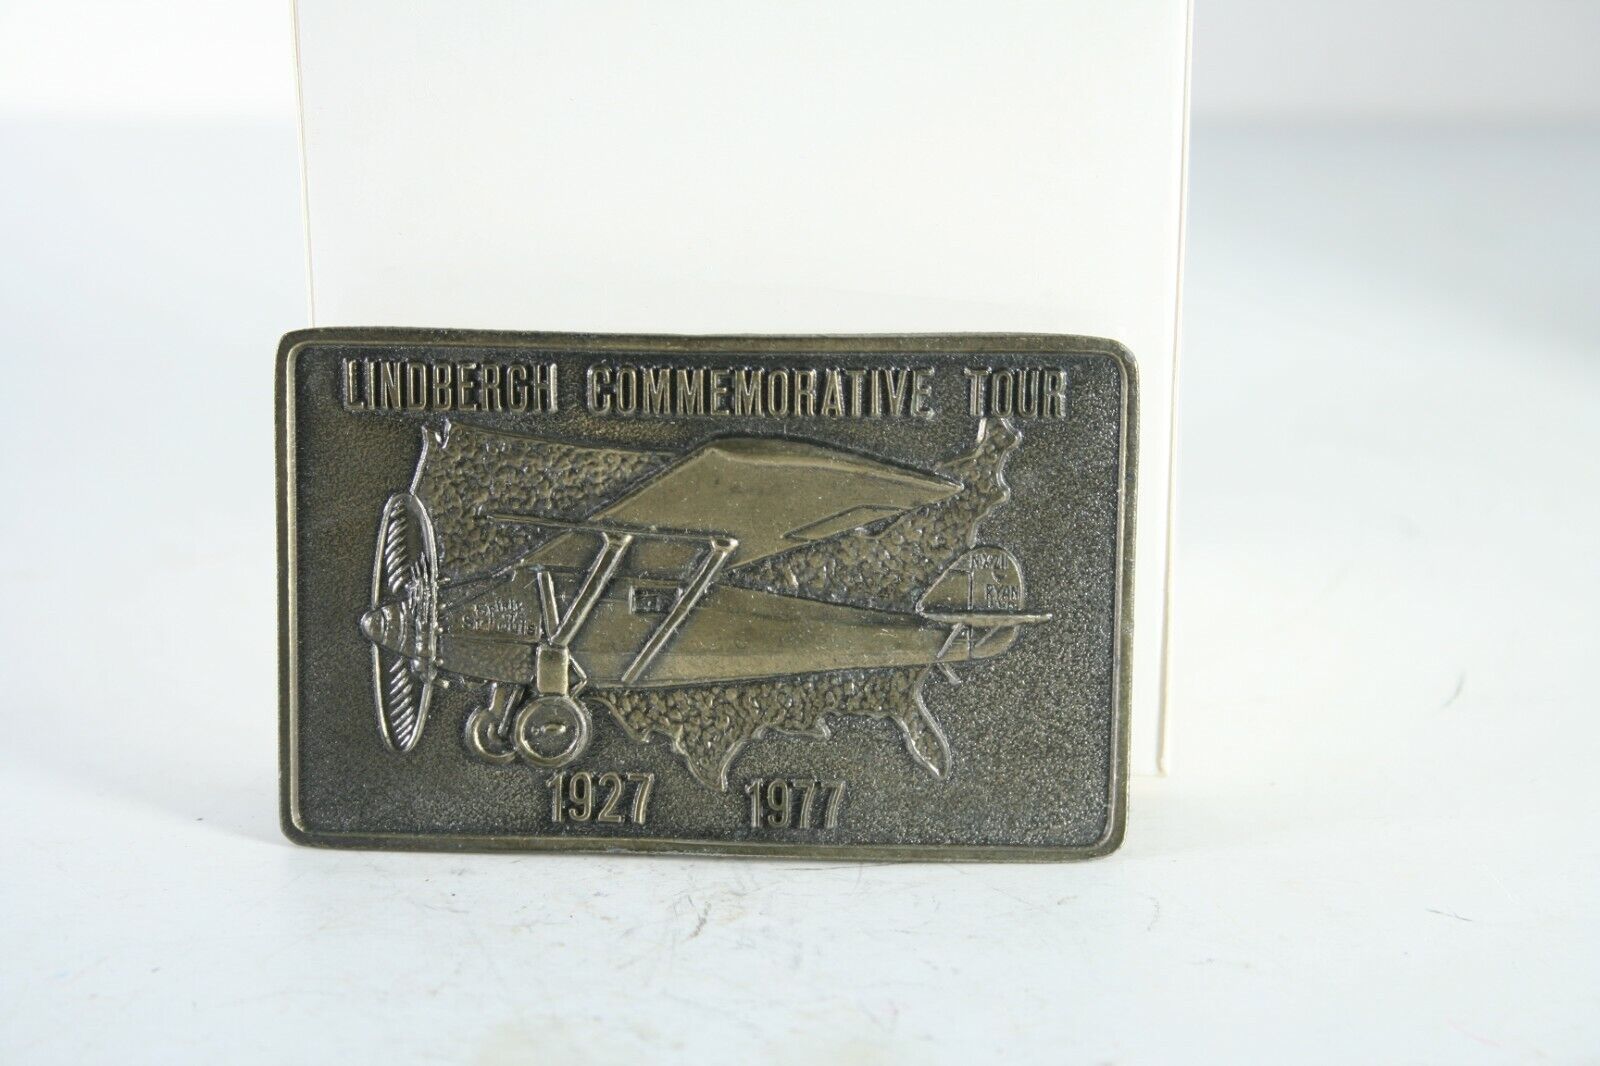 Lindbergh Commemorative Tour 1927-1977 Belt Buckle